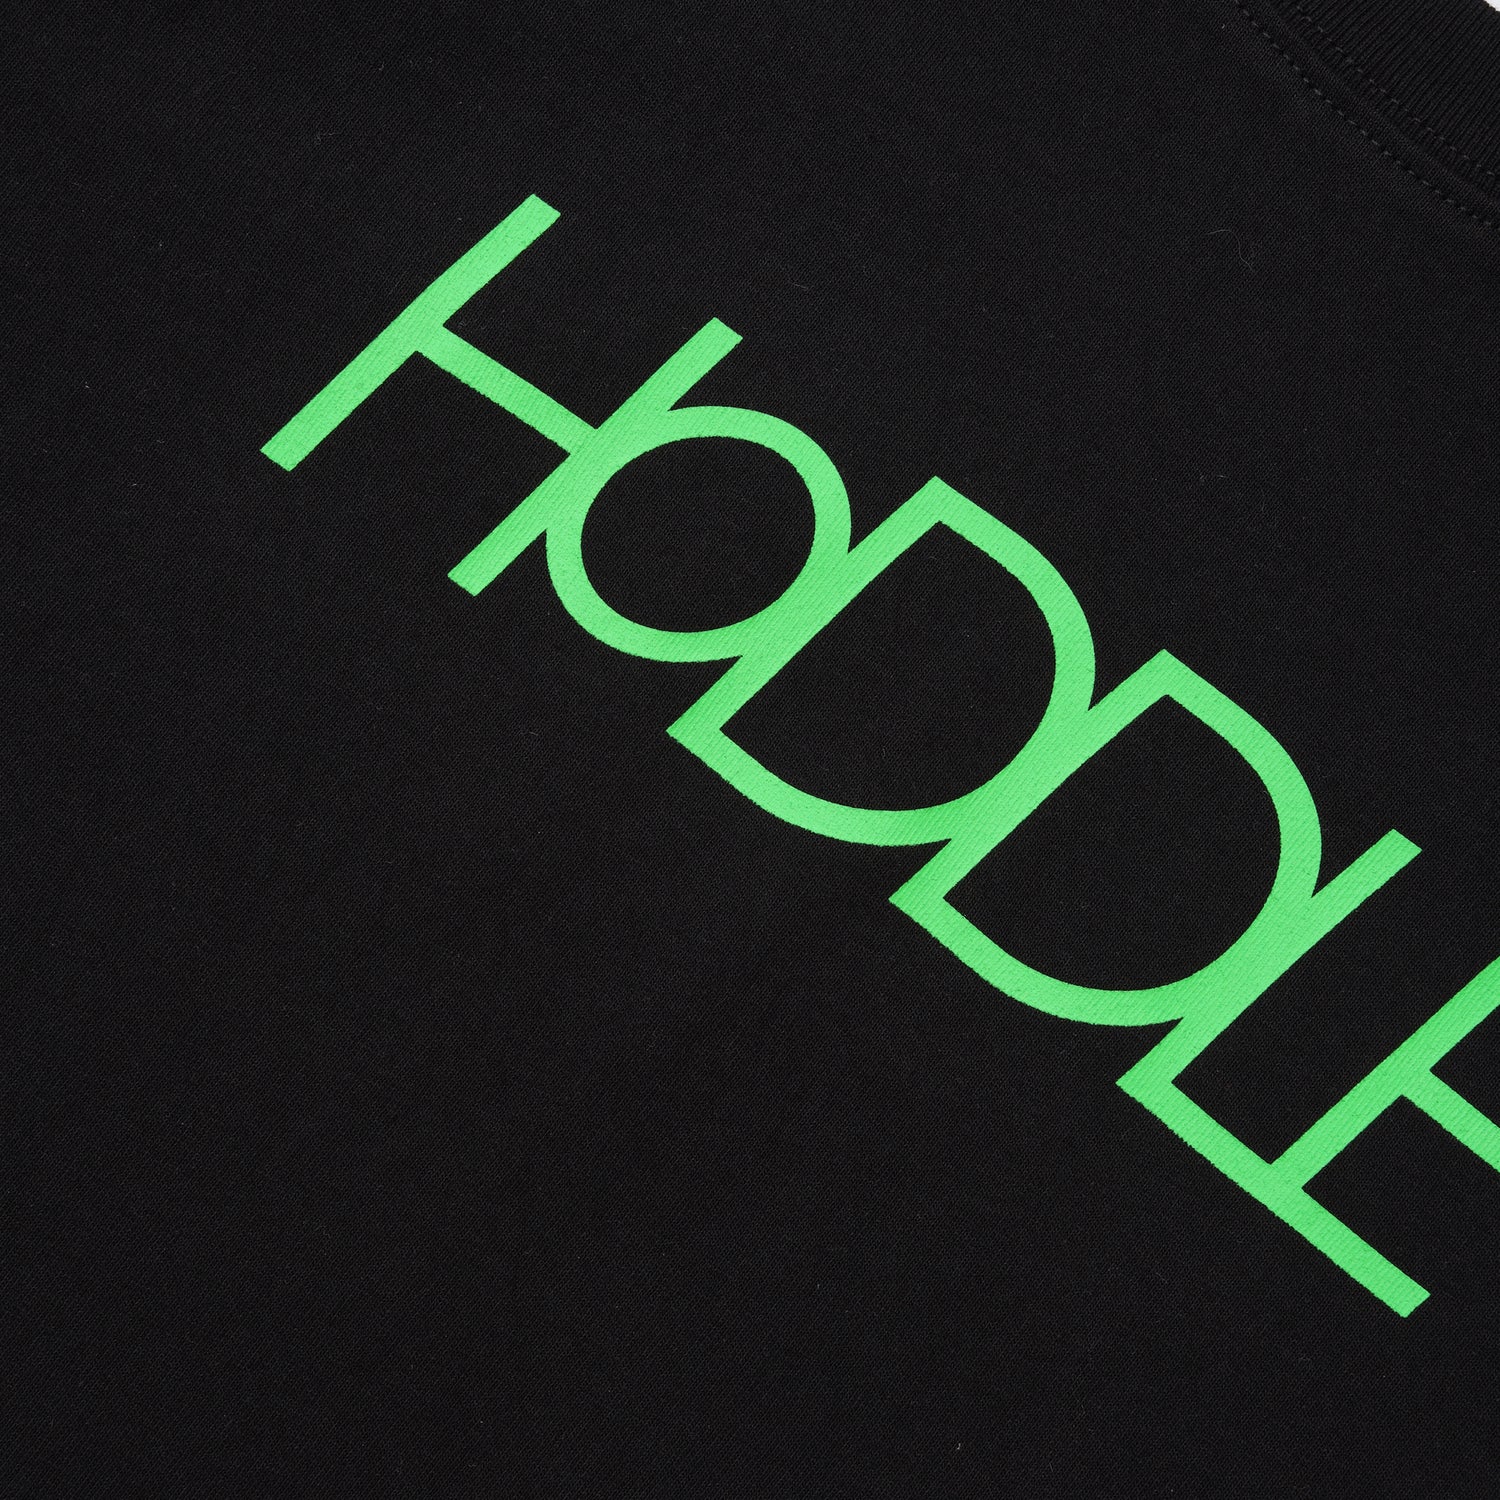 Hoddle Green Logo Tee, Black